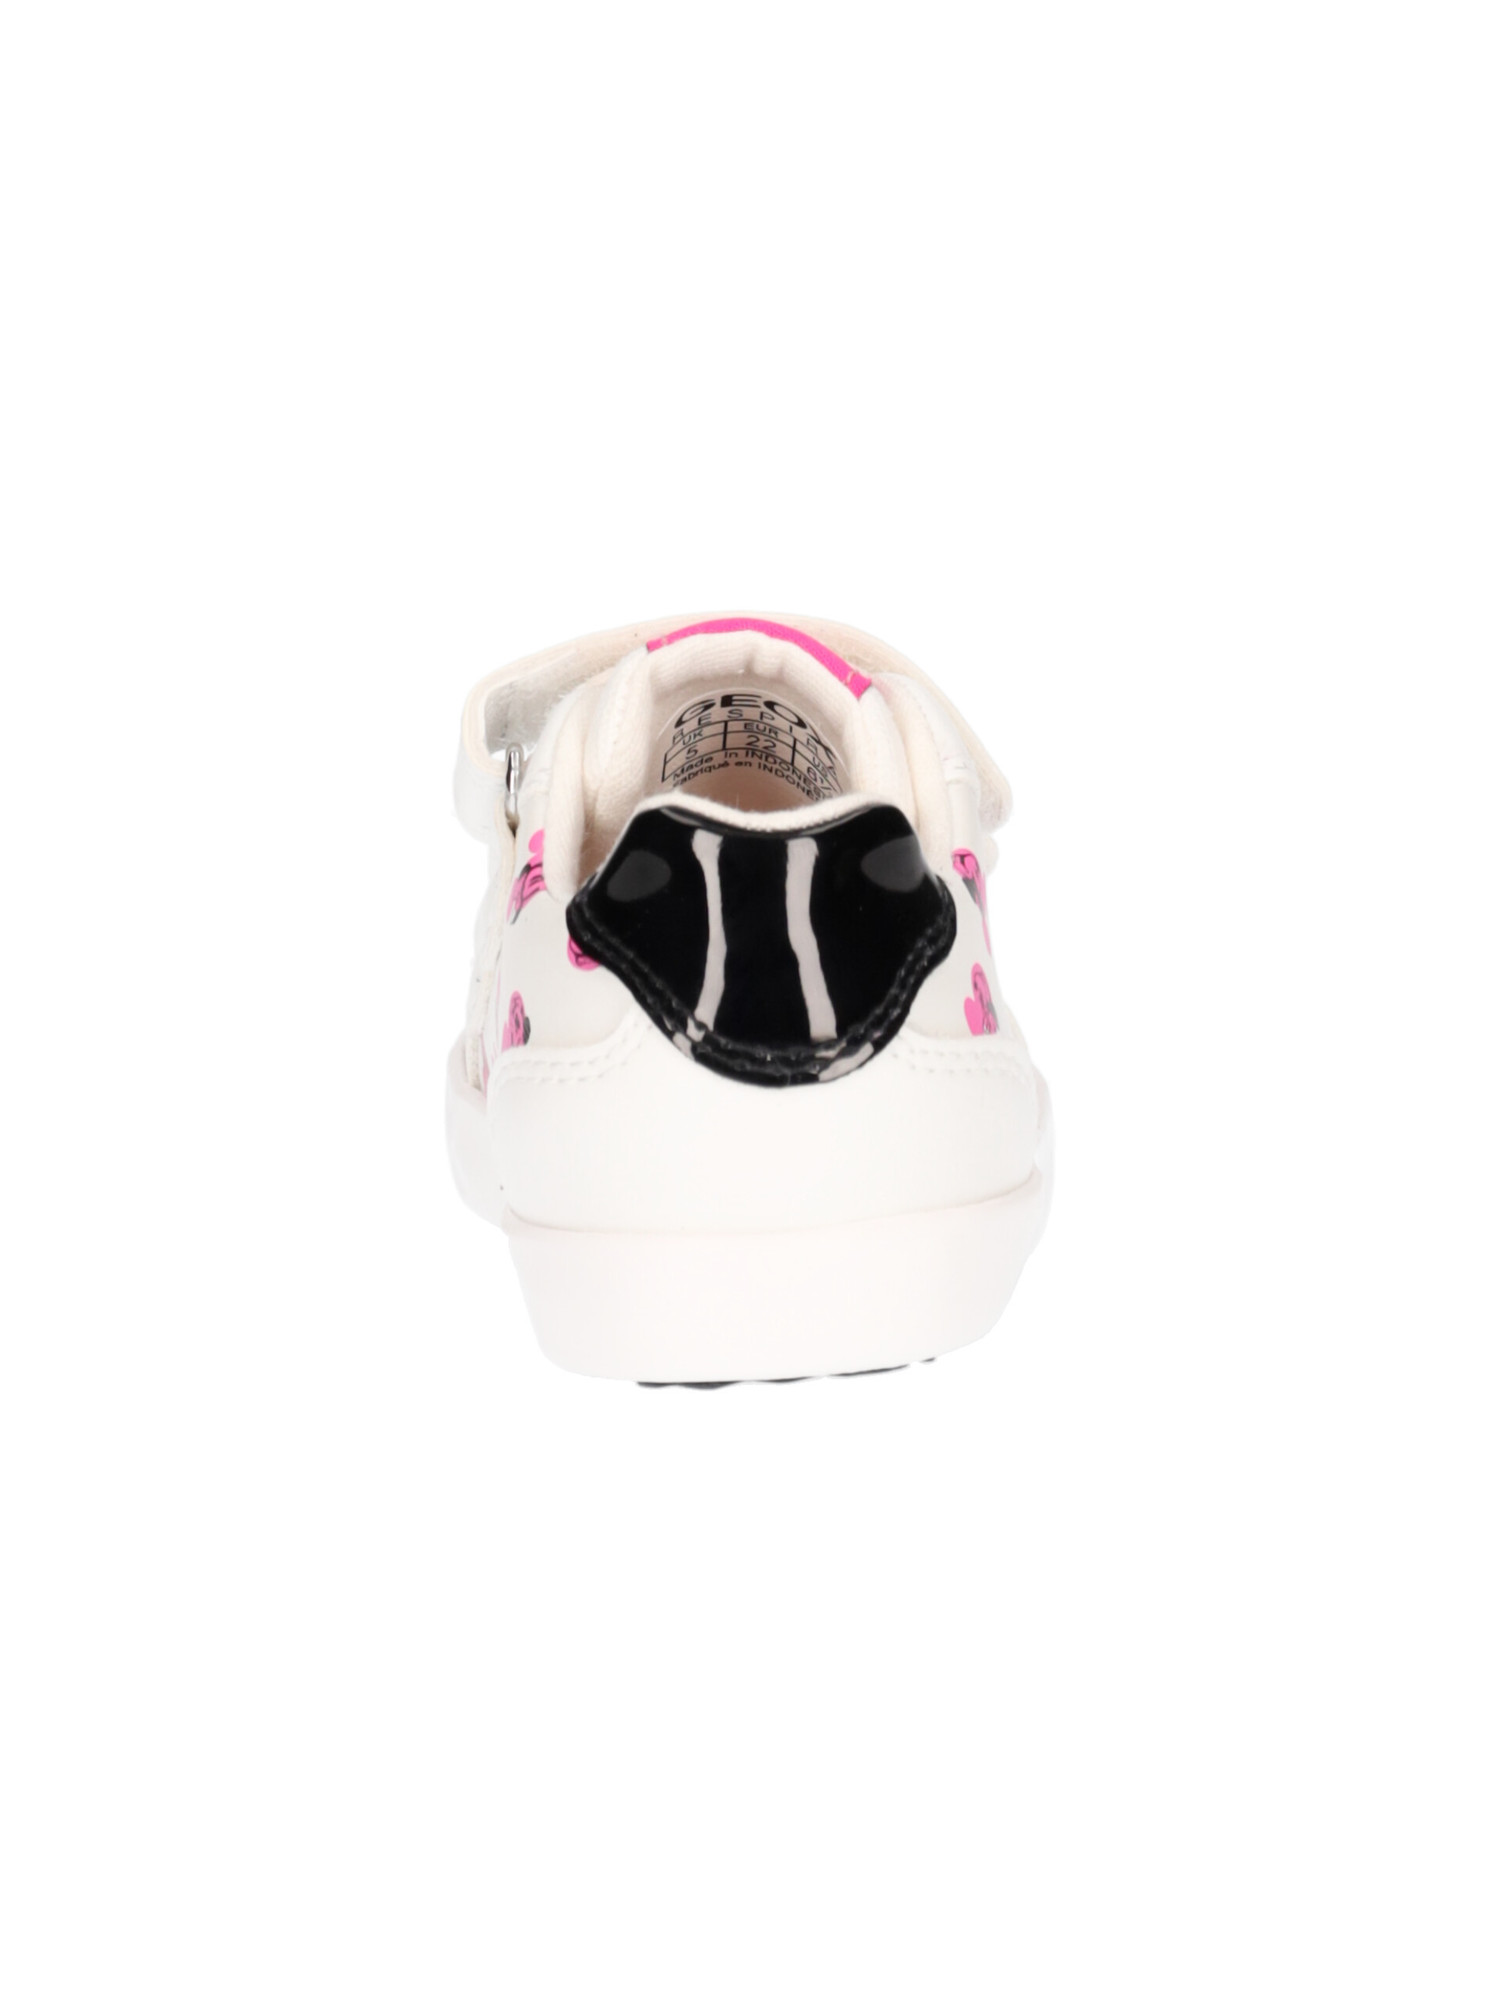 sneaker-minnie-by-geox-primi-passi-bambina-bianca-b515c1